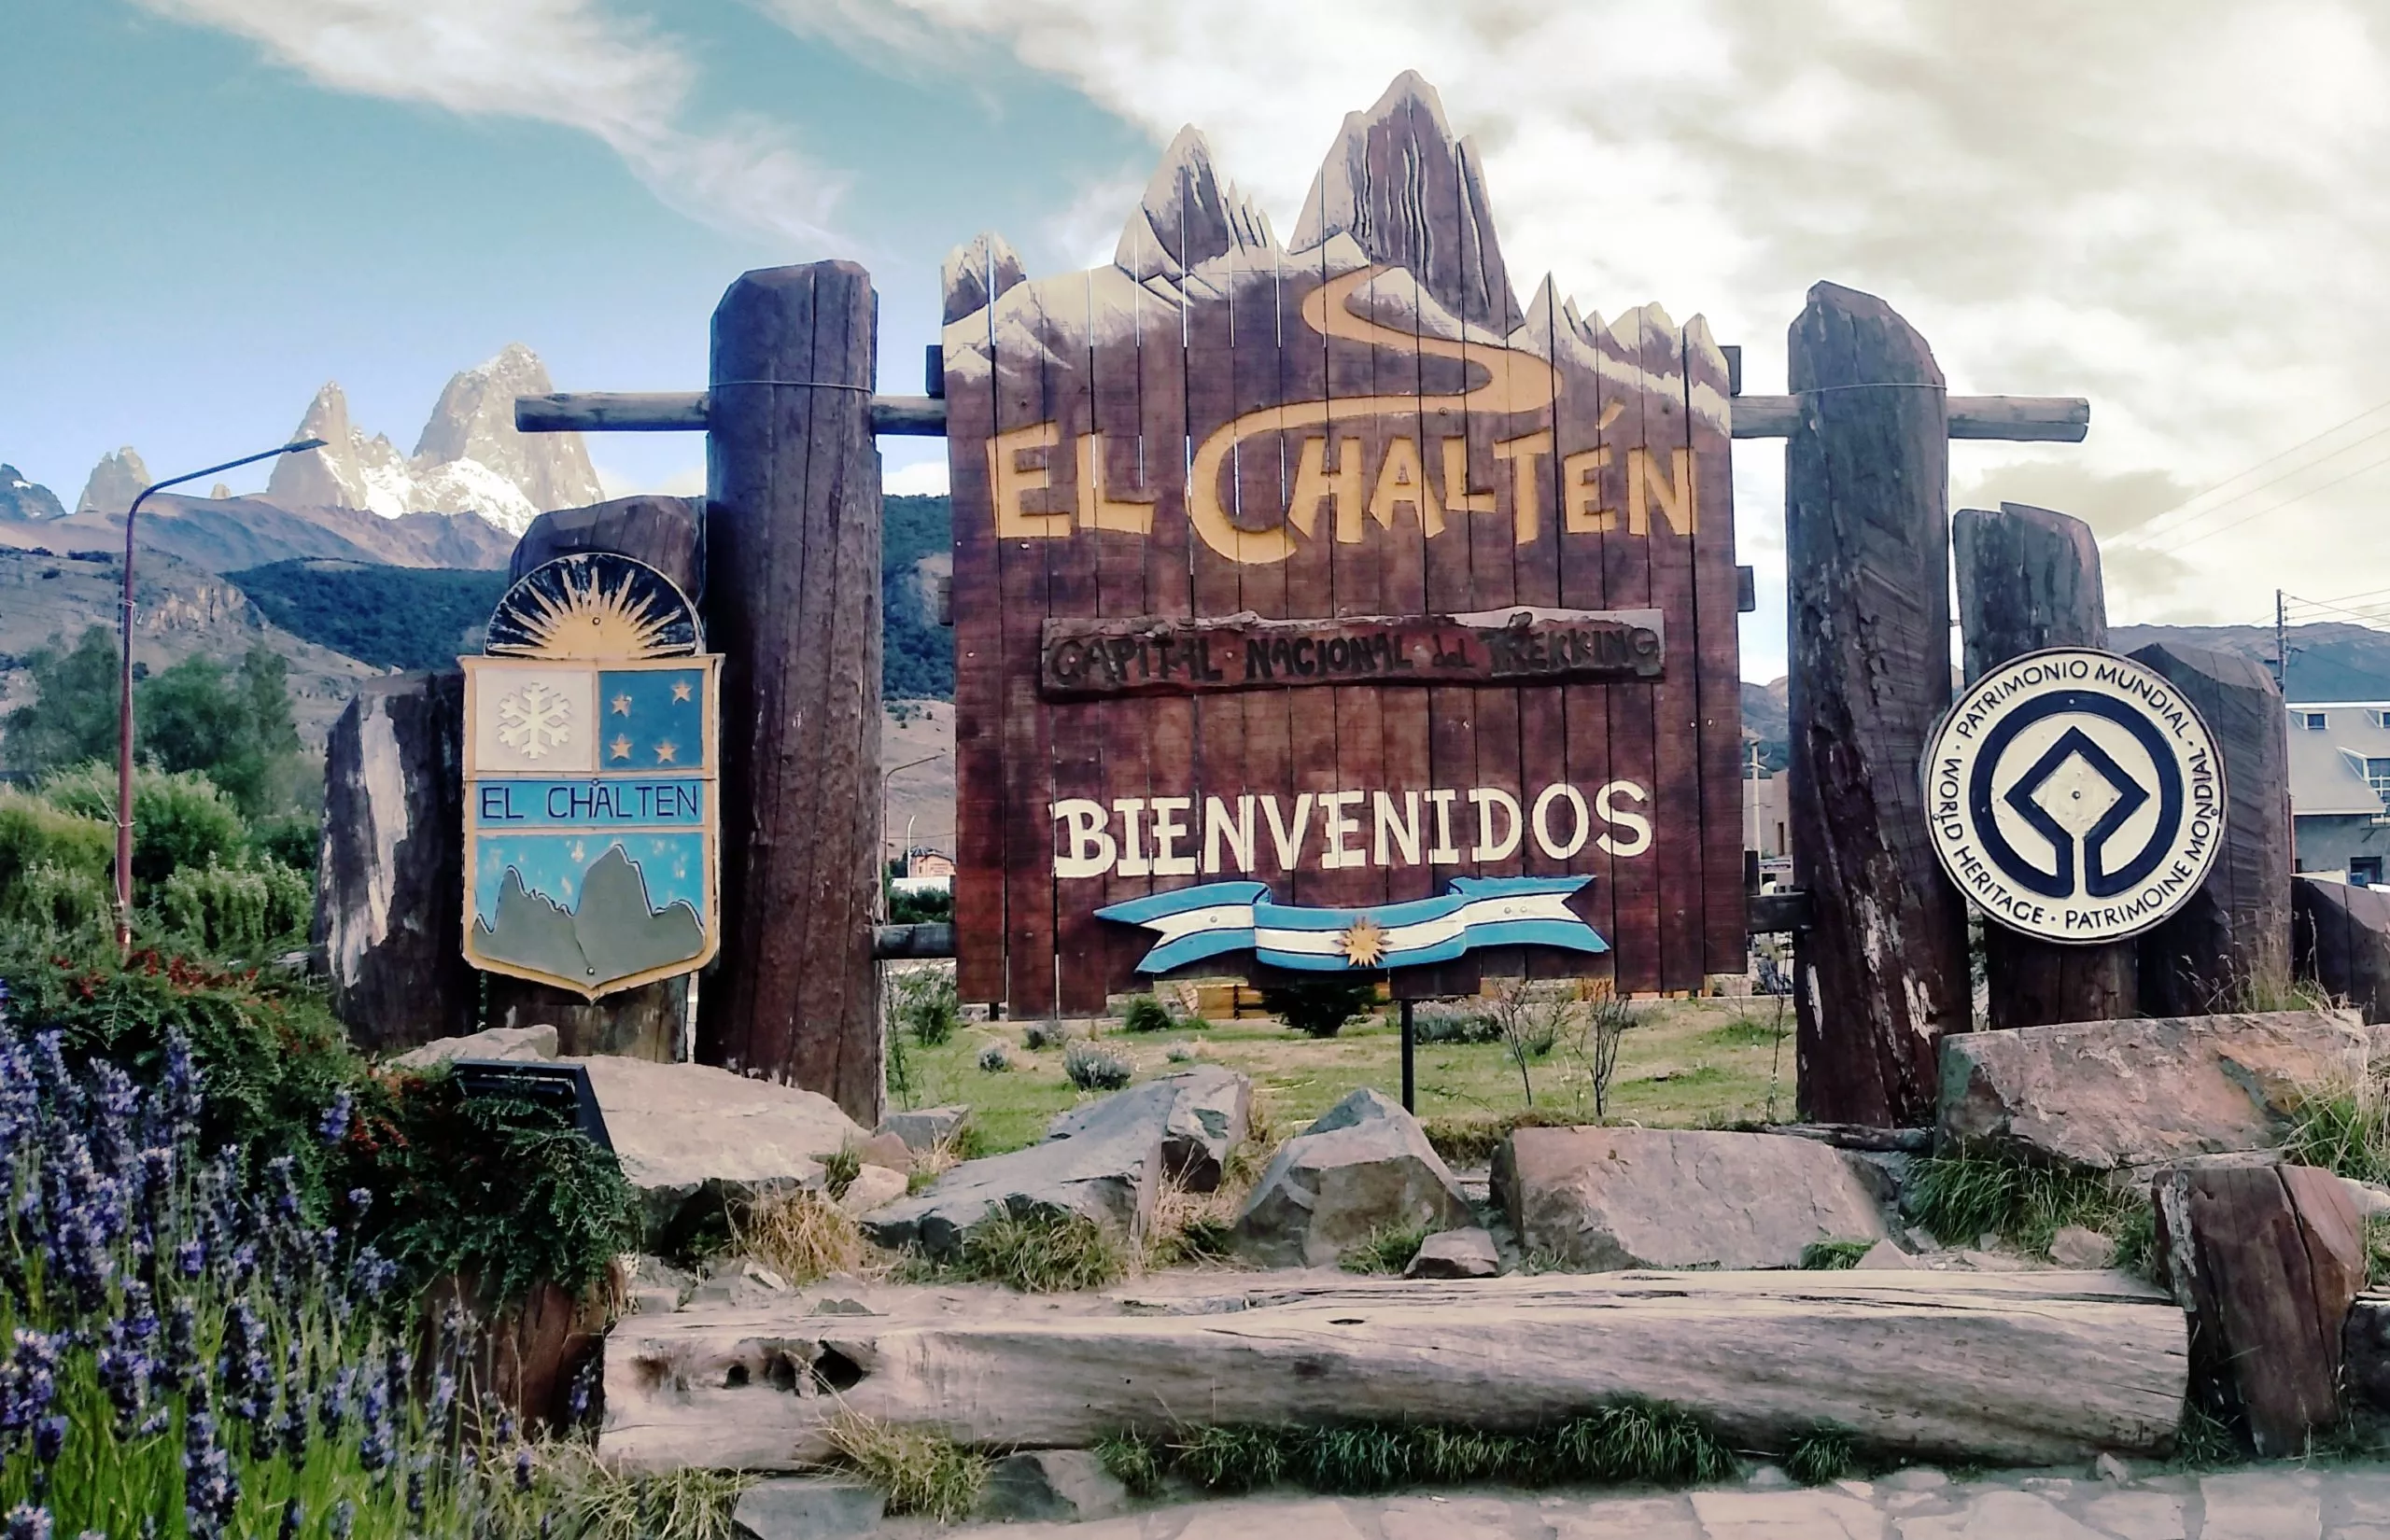 El Chalten in Argentina, South America | Trekking & Hiking - Rated 3.6